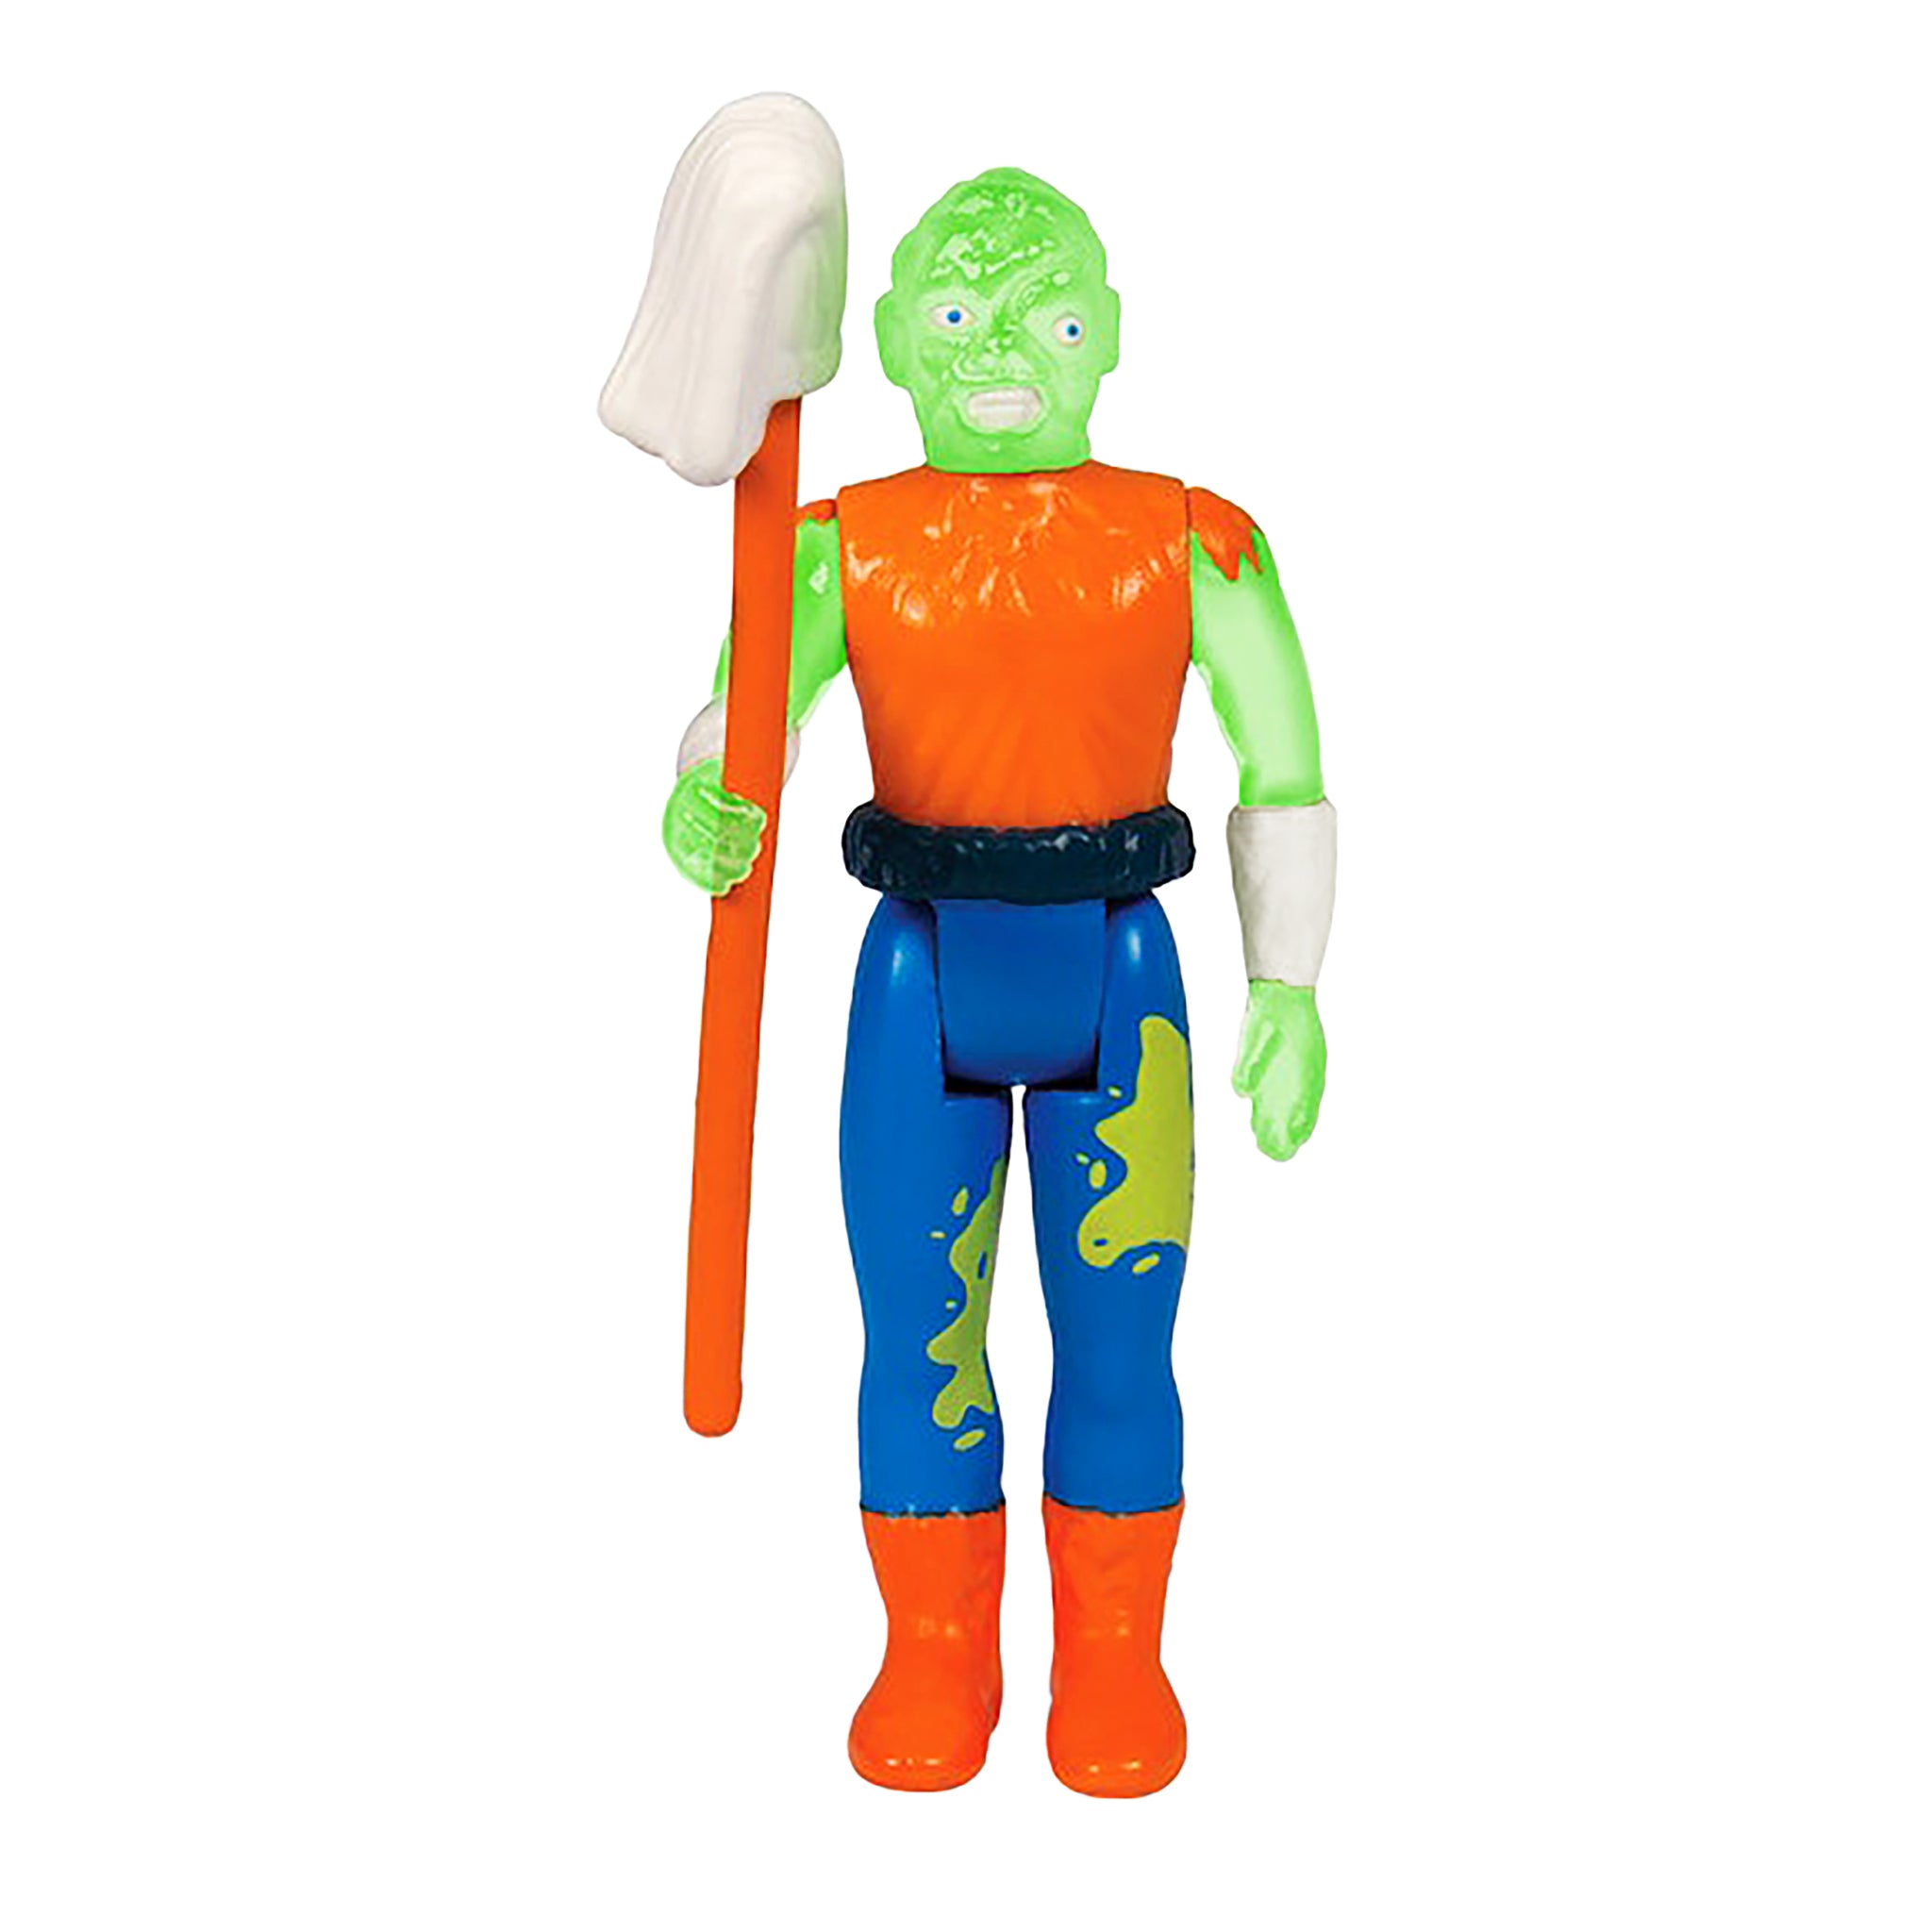 Toxic Avenger ReAction Figure - Translucent Green Slime in Box